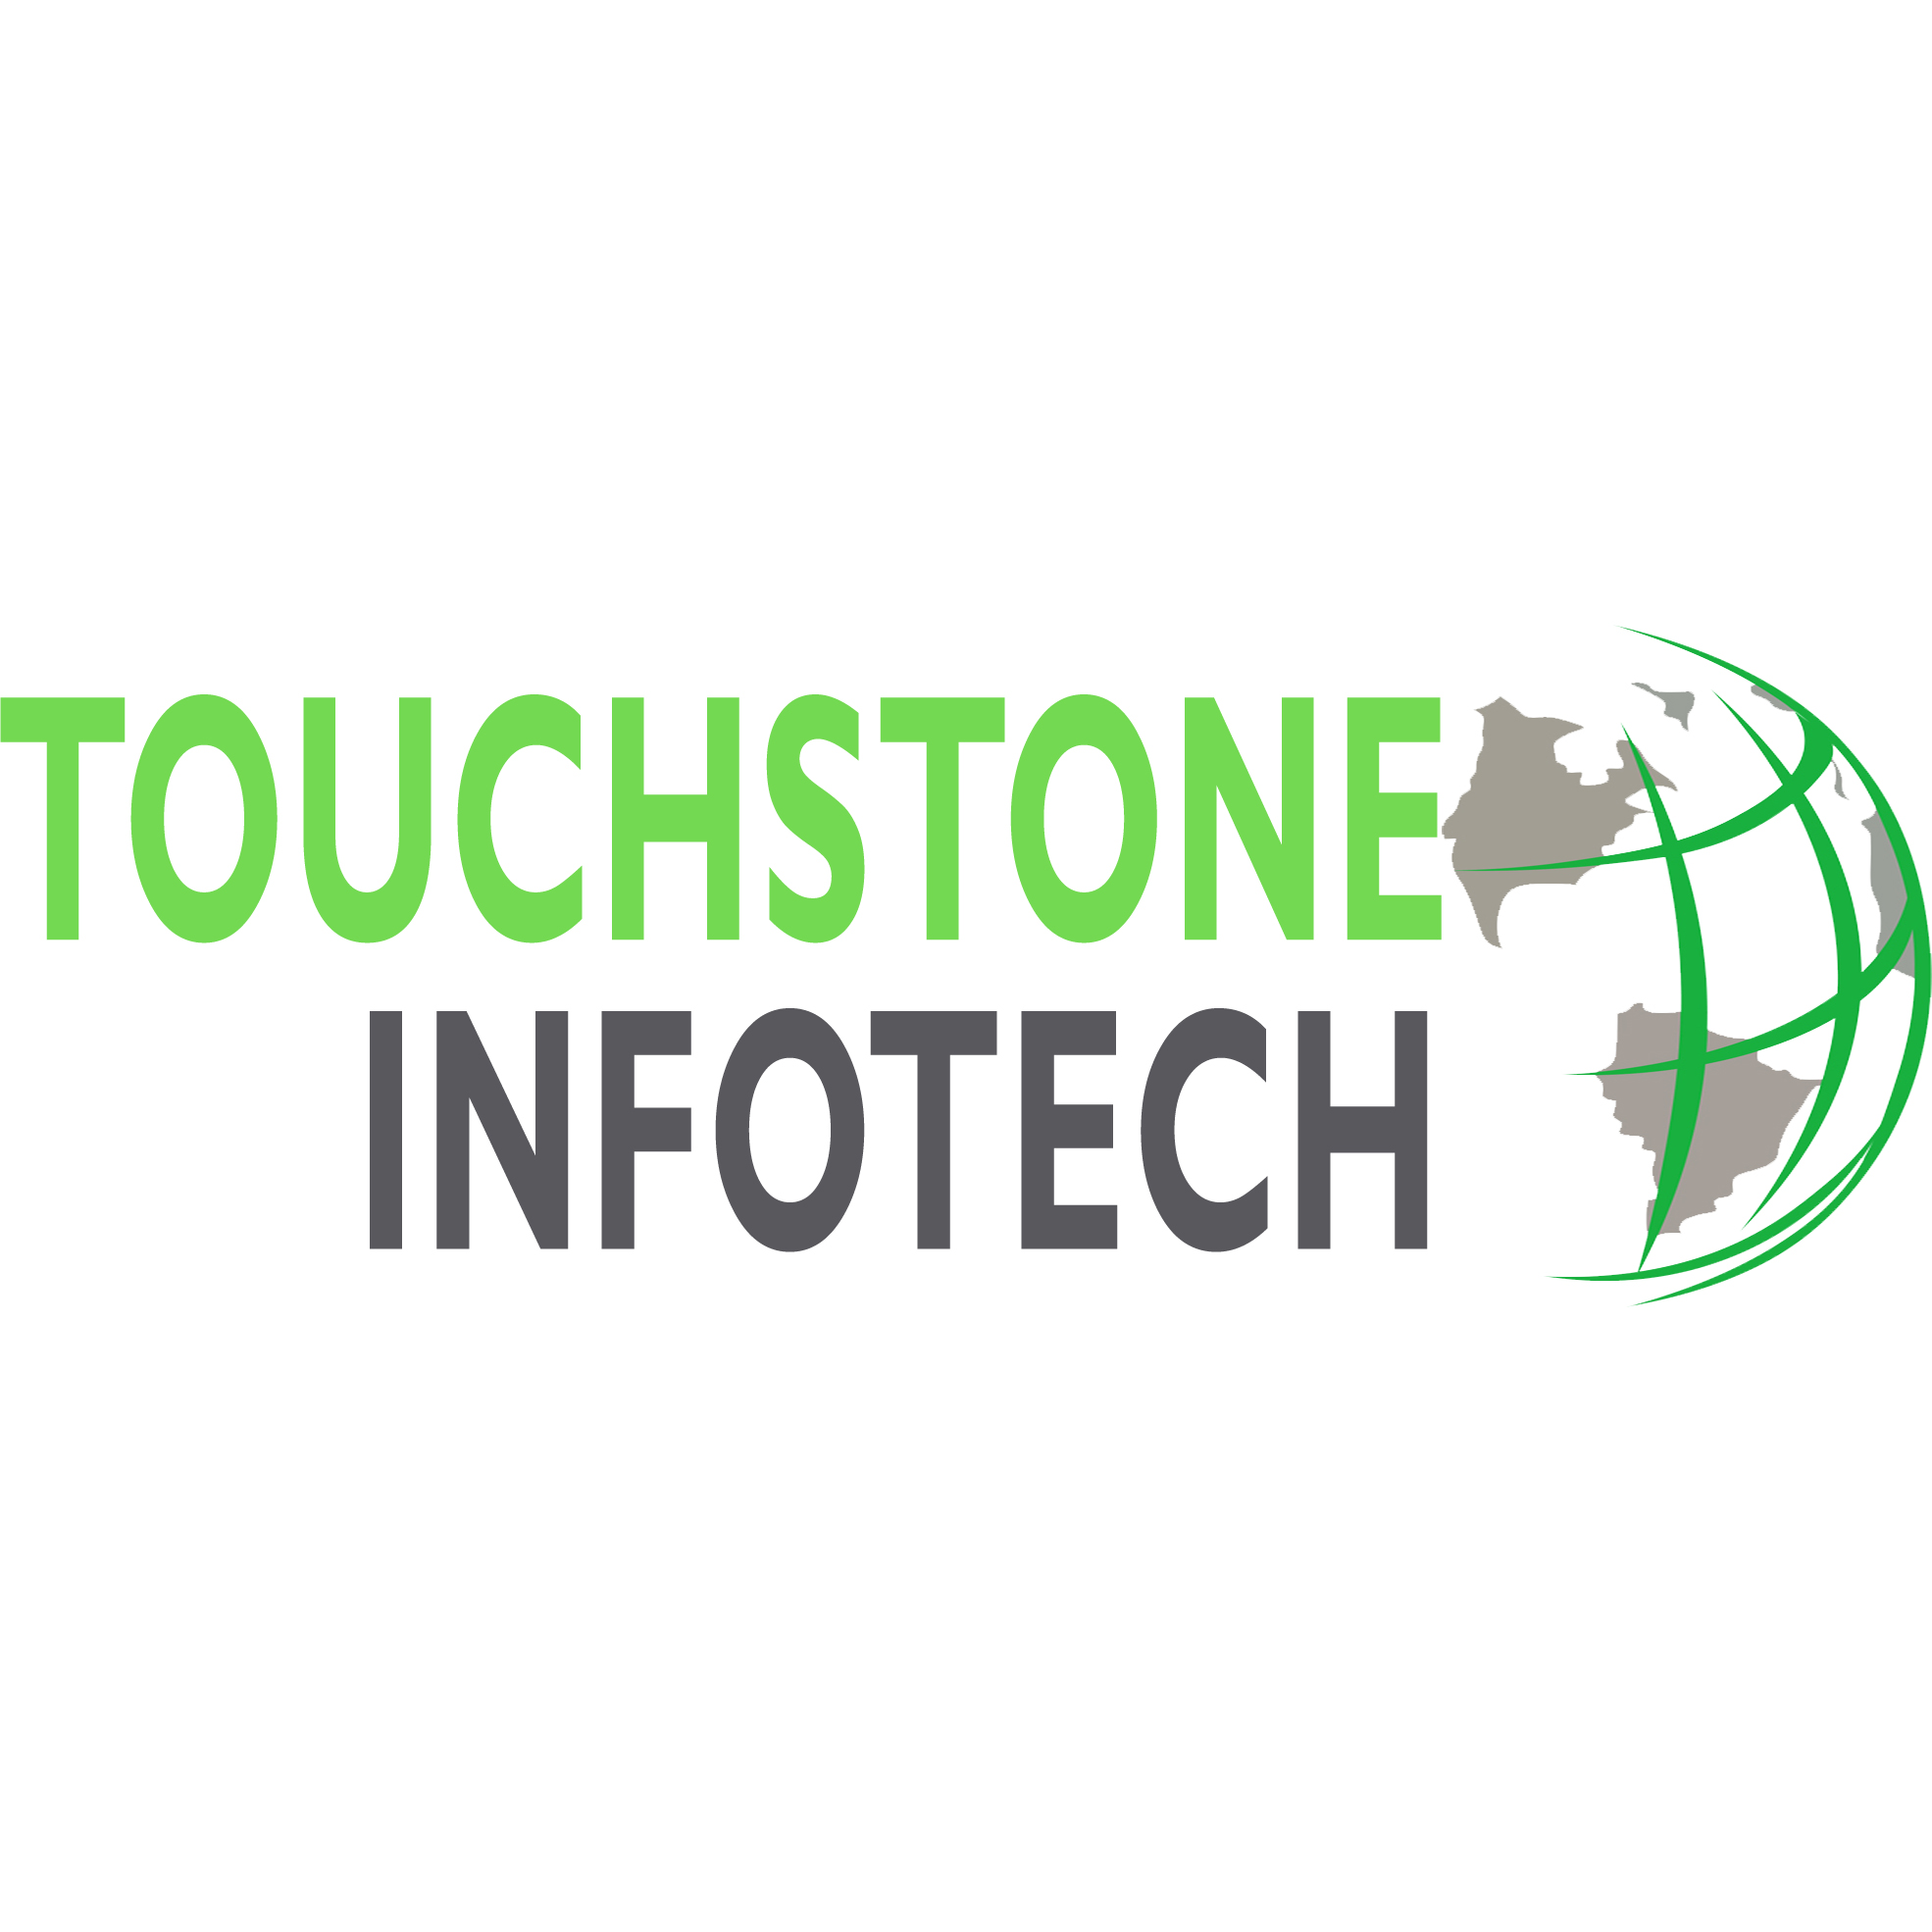 Best Web Designing Services - Touchstone InfotechServicesAdvertising - DesignSouth DelhiOther